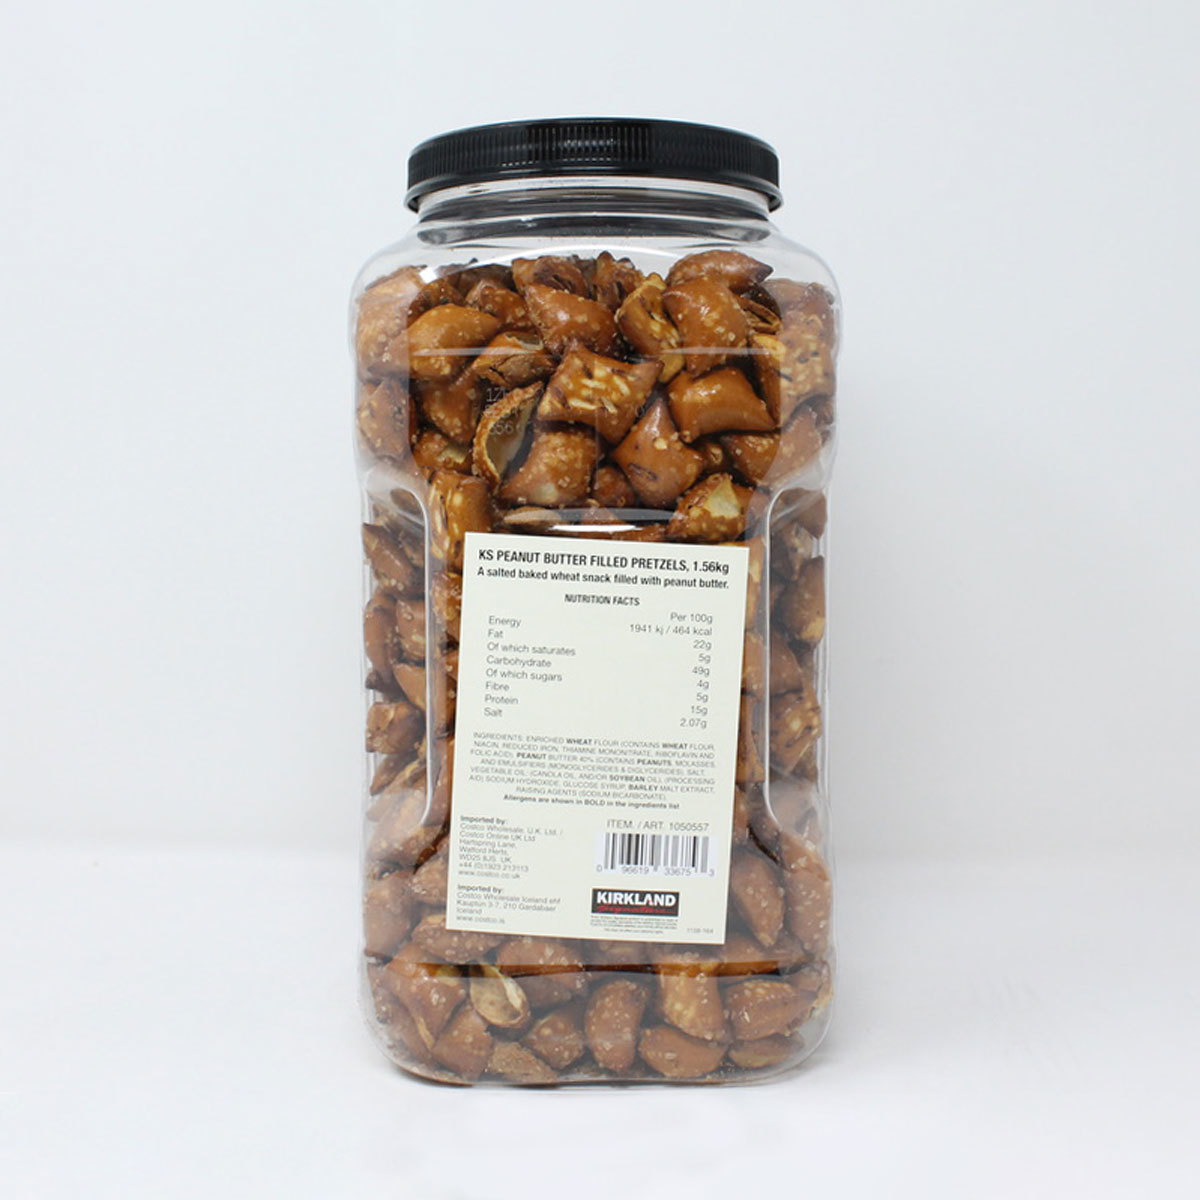 Kirkland Signature Peanut Butter Filled Pretzel Nuggets, 1.56kg